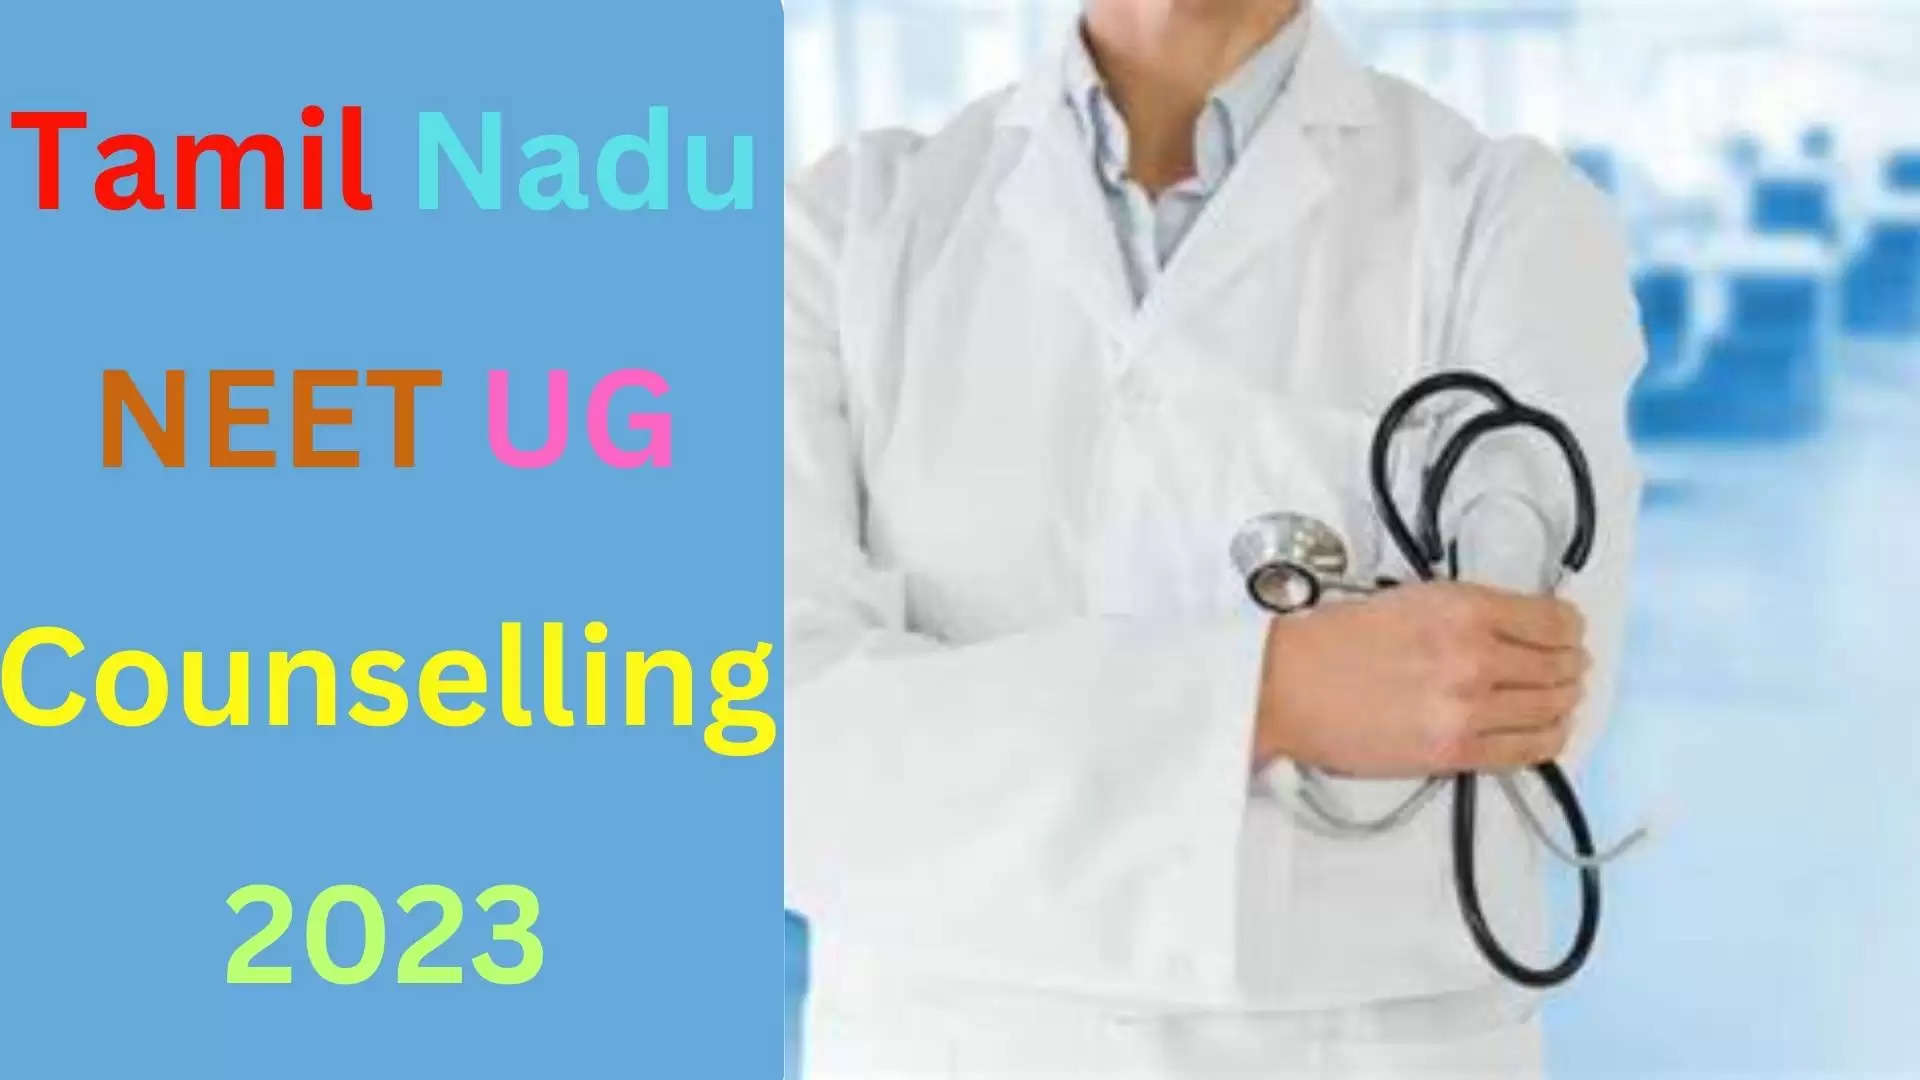 Tamil Nadu NEET UG Counselling 2023